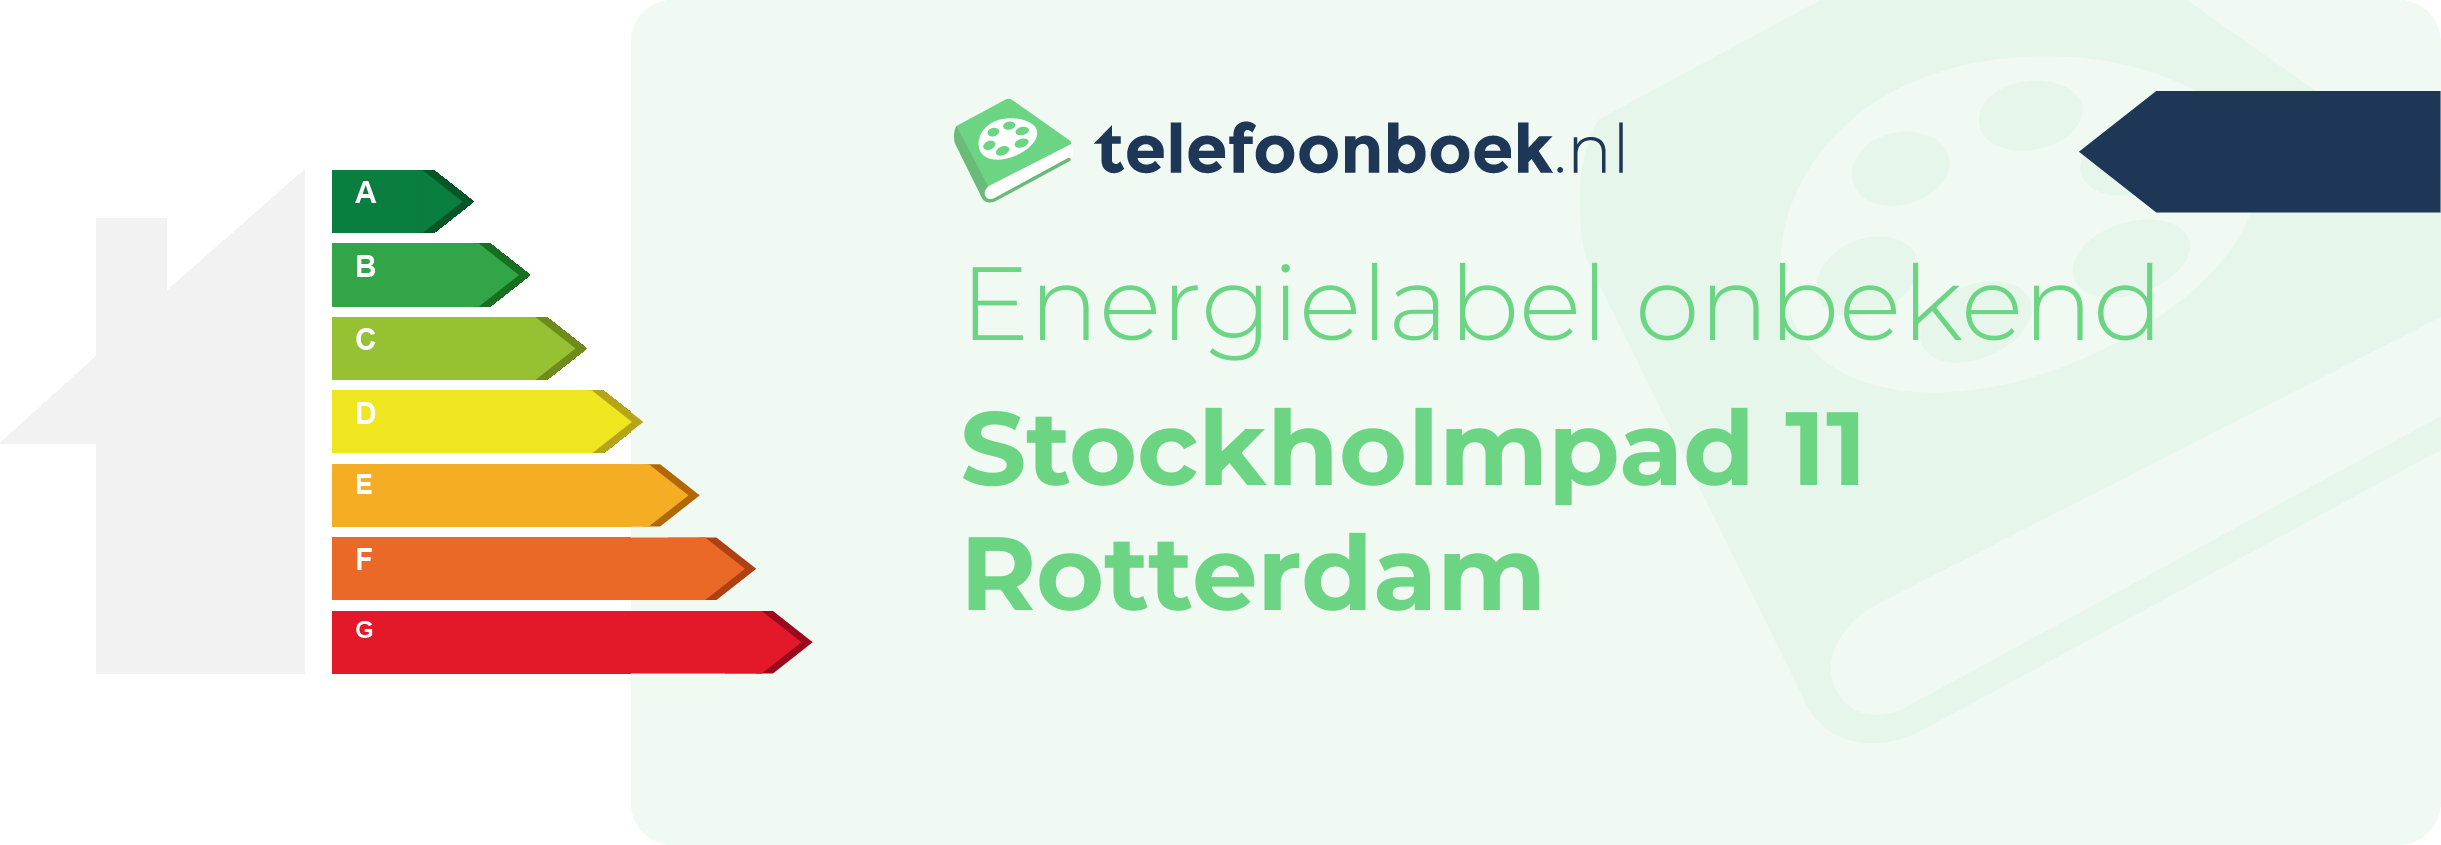 Energielabel Stockholmpad 11 Rotterdam